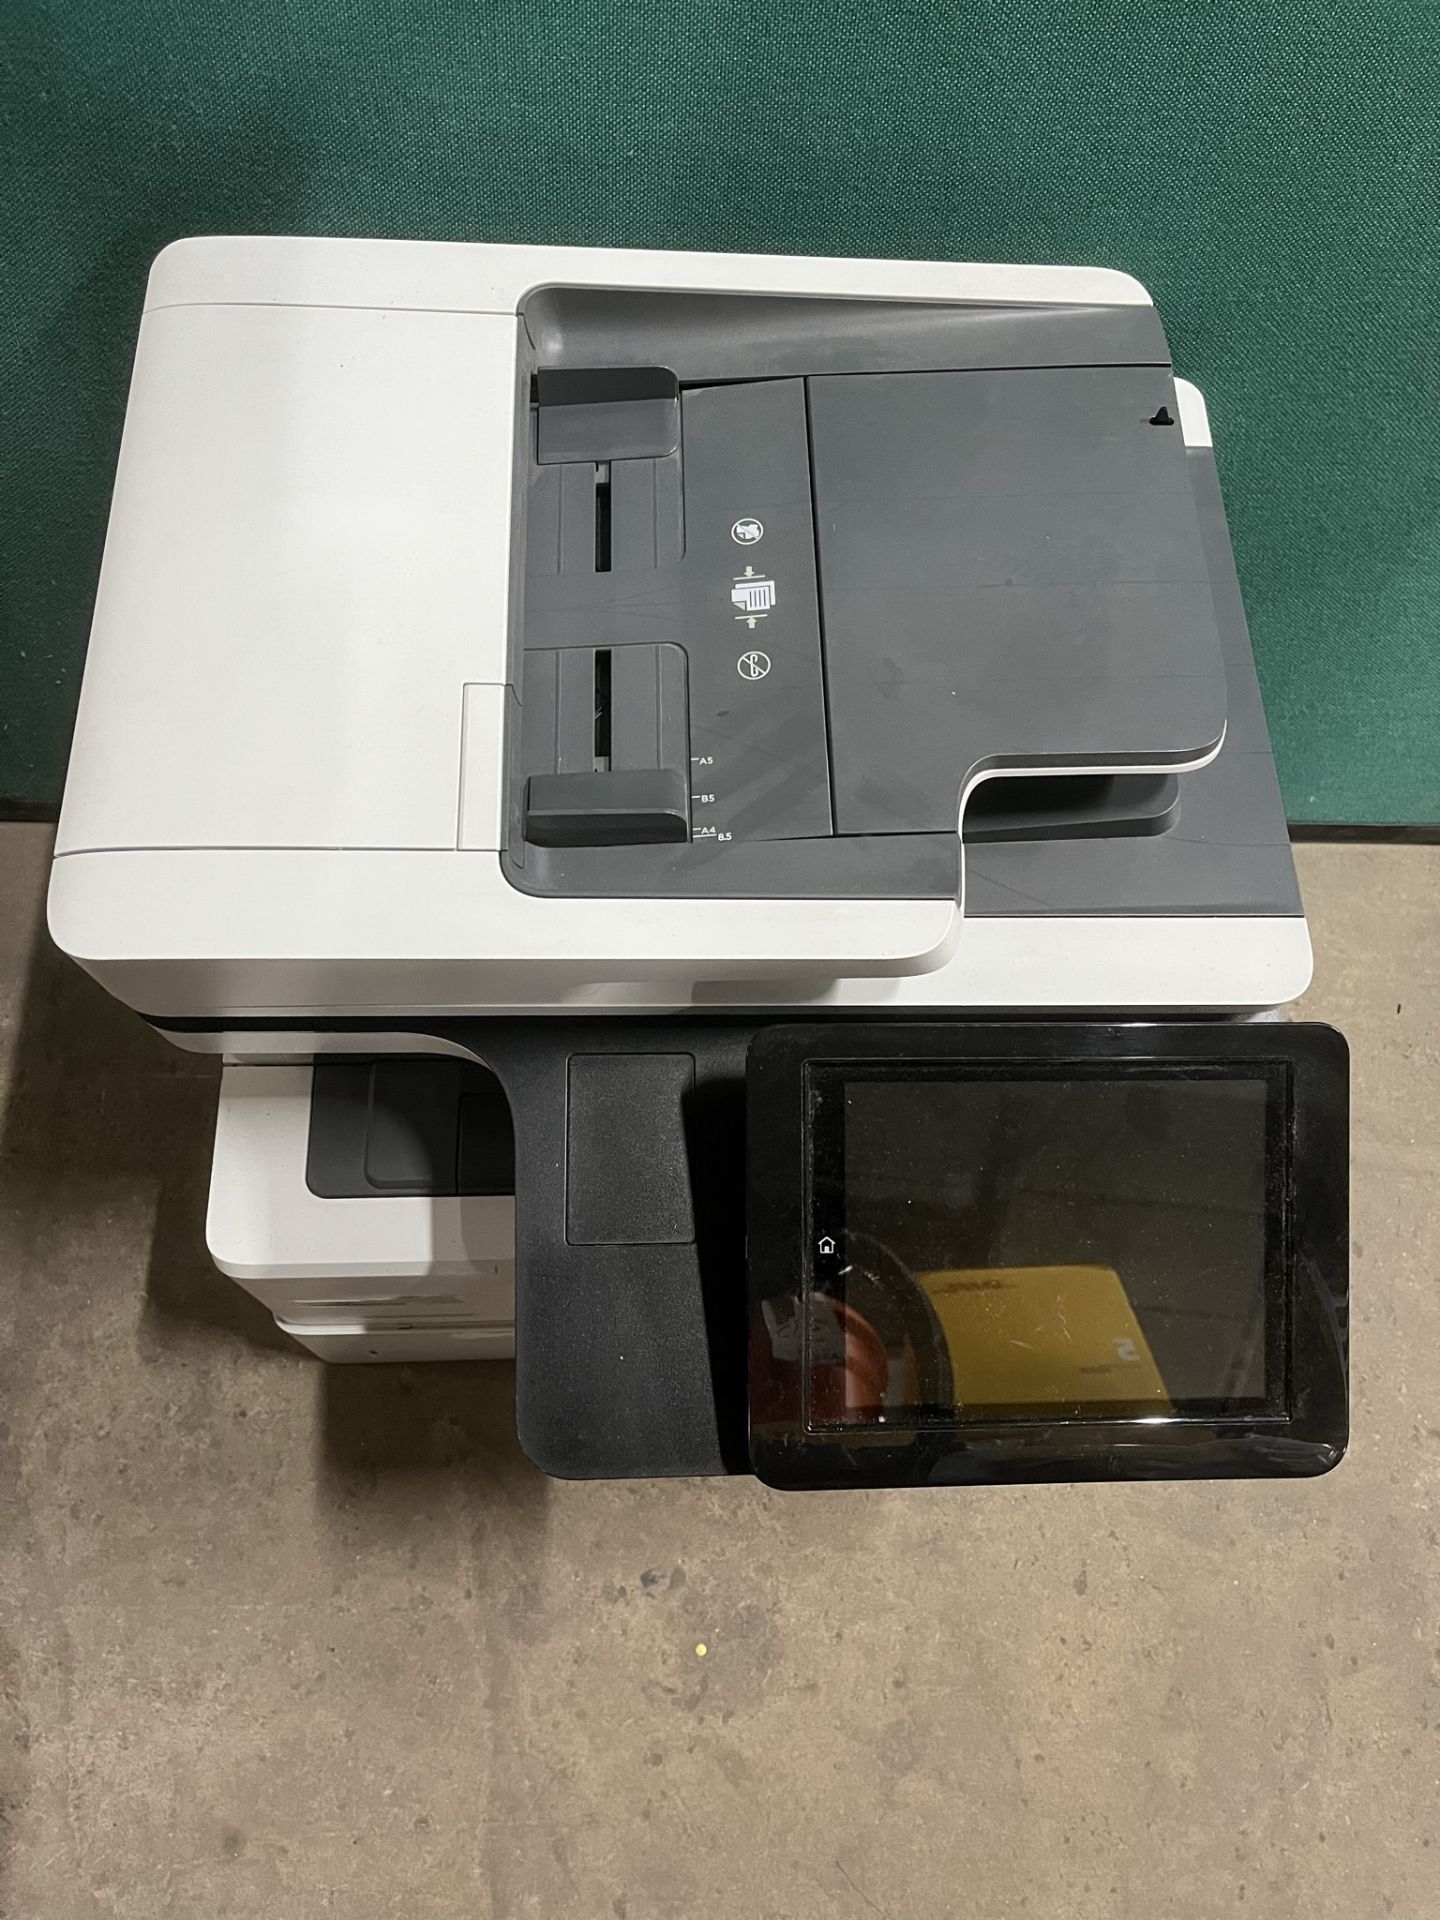 HP MFPE52545 Lasetjest Multifunction Printer - Image 2 of 6